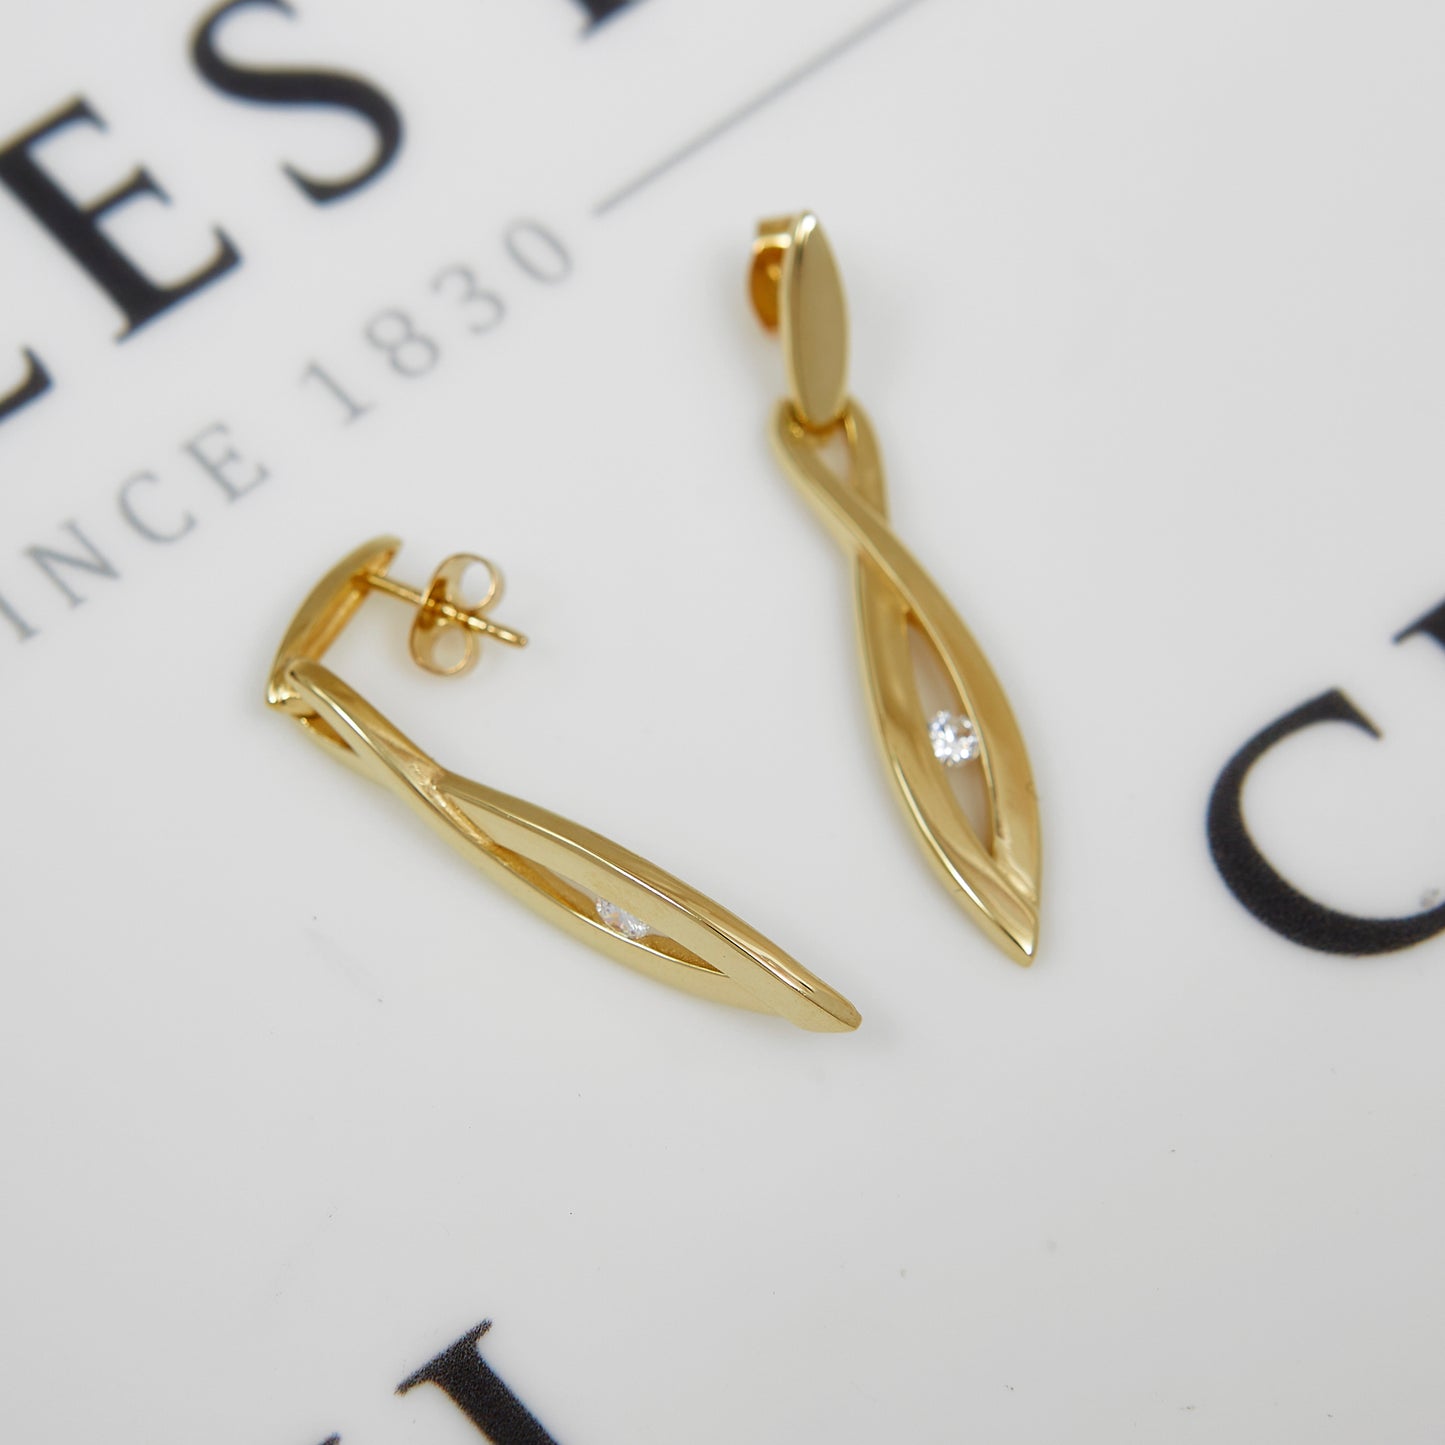 Pre-Owned 9ct Gold CZ Ellipse Pendant, Earring & Necklace Set